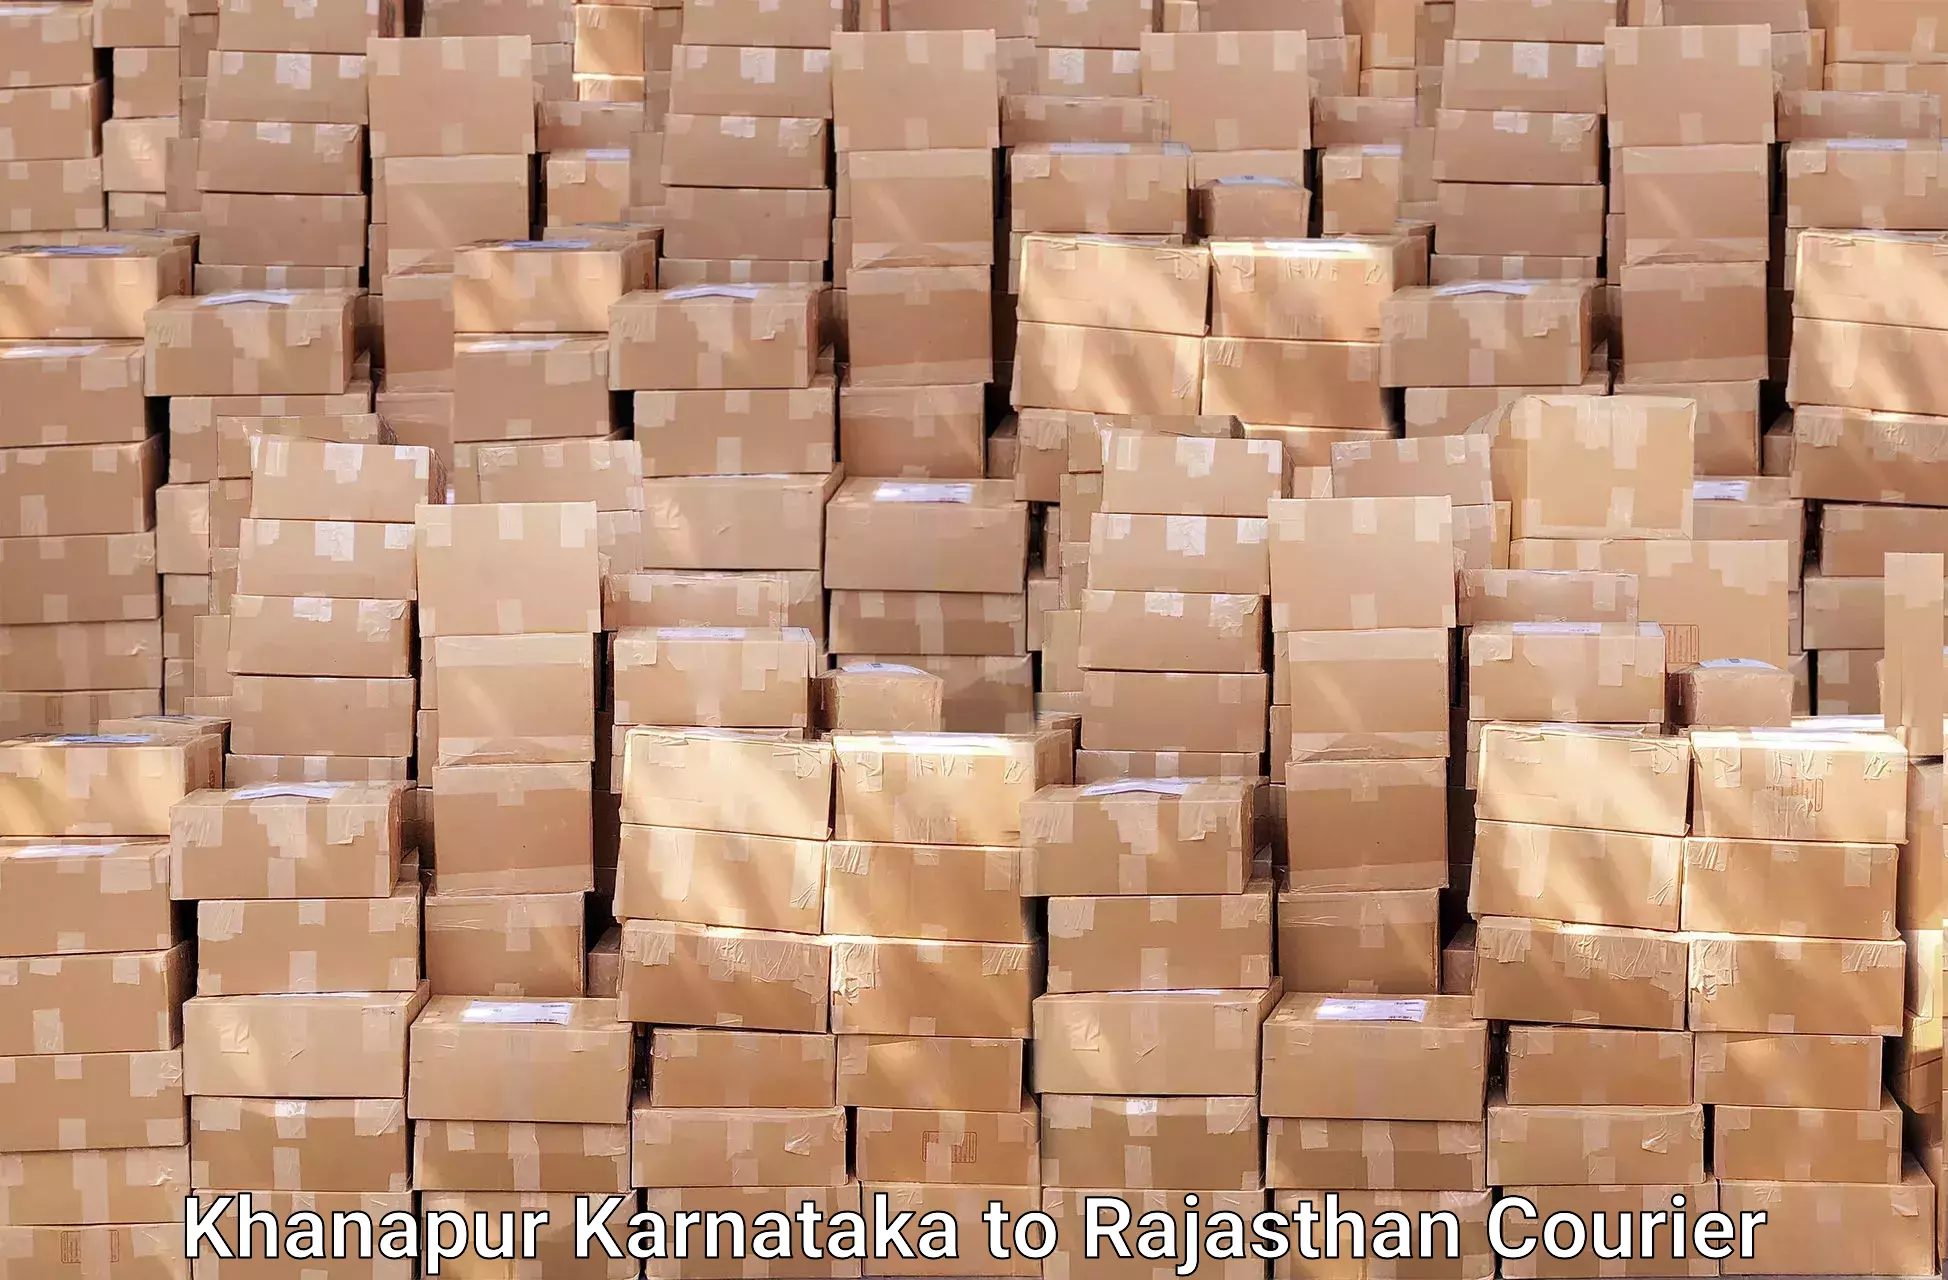 Reliable moving assistance in Khanapur Karnataka to Rajasthan